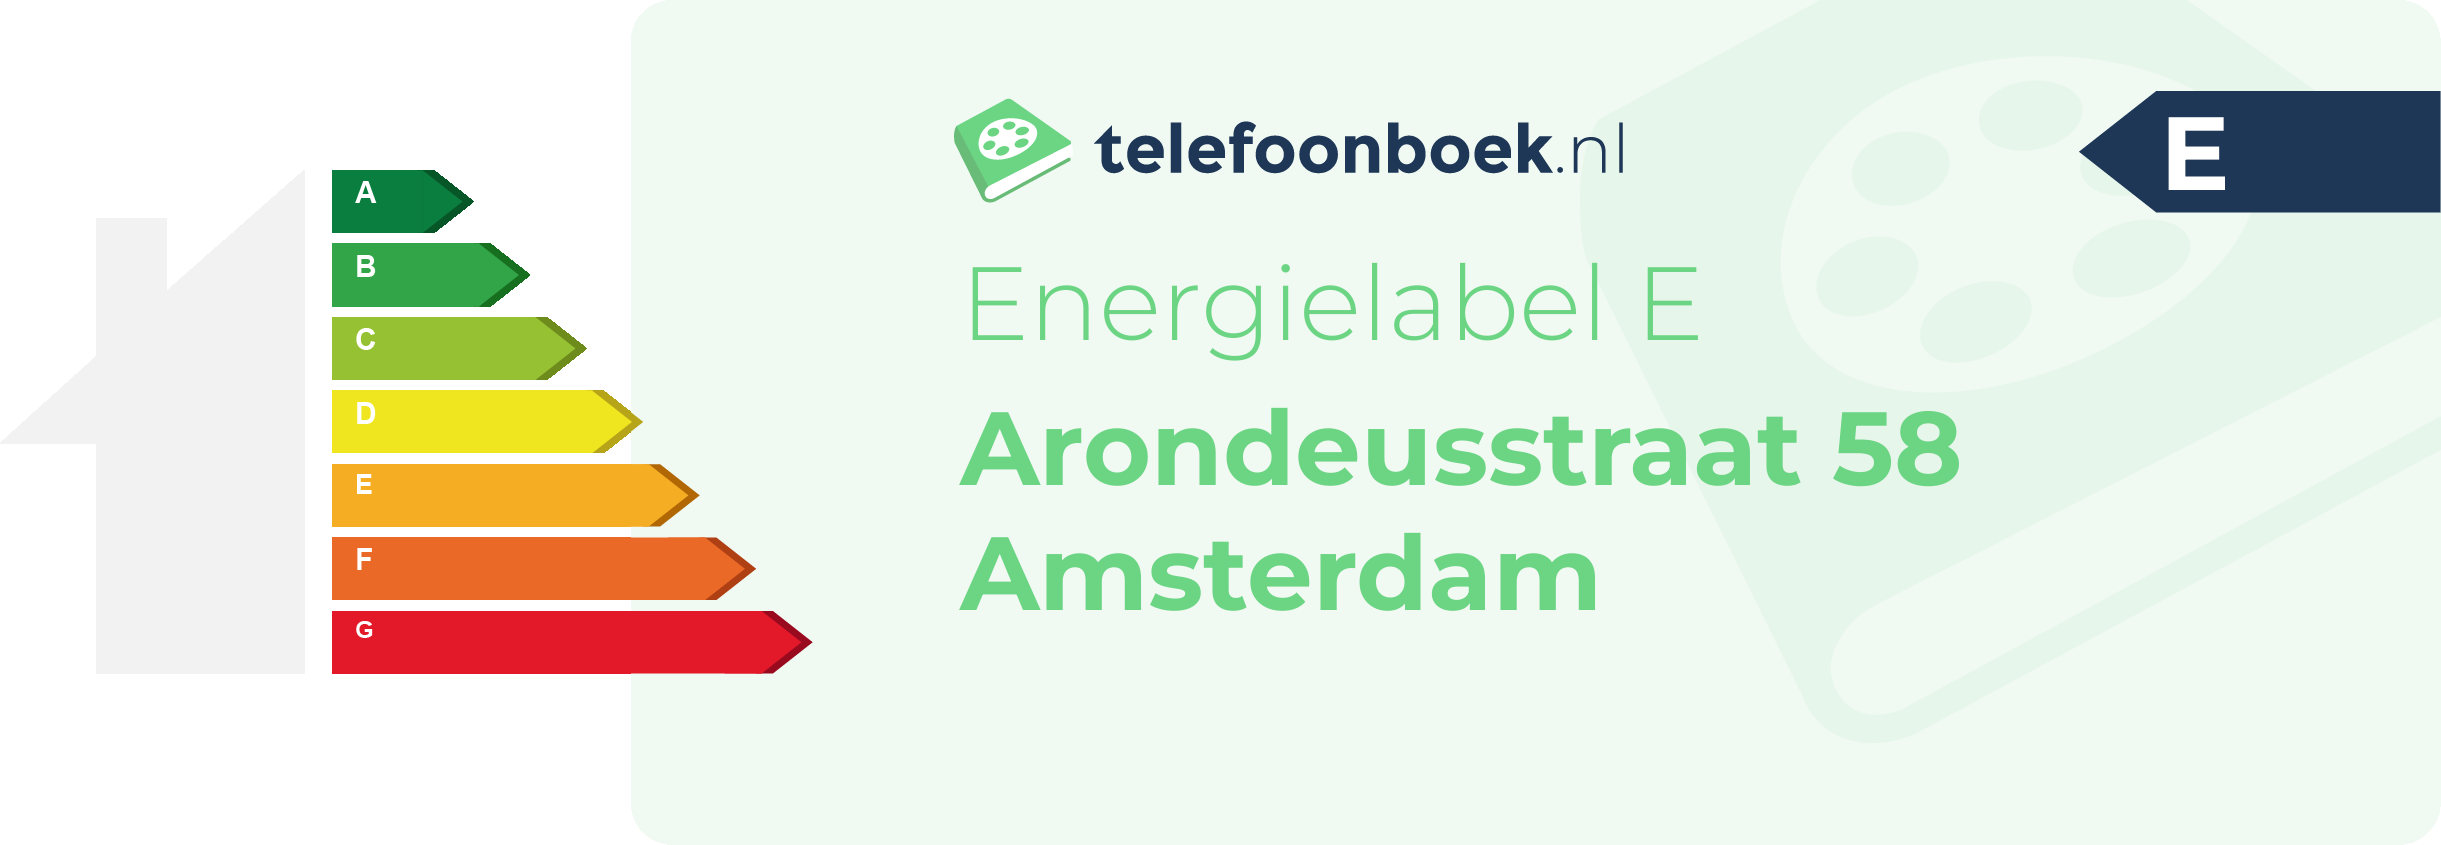 Energielabel Arondeusstraat 58 Amsterdam